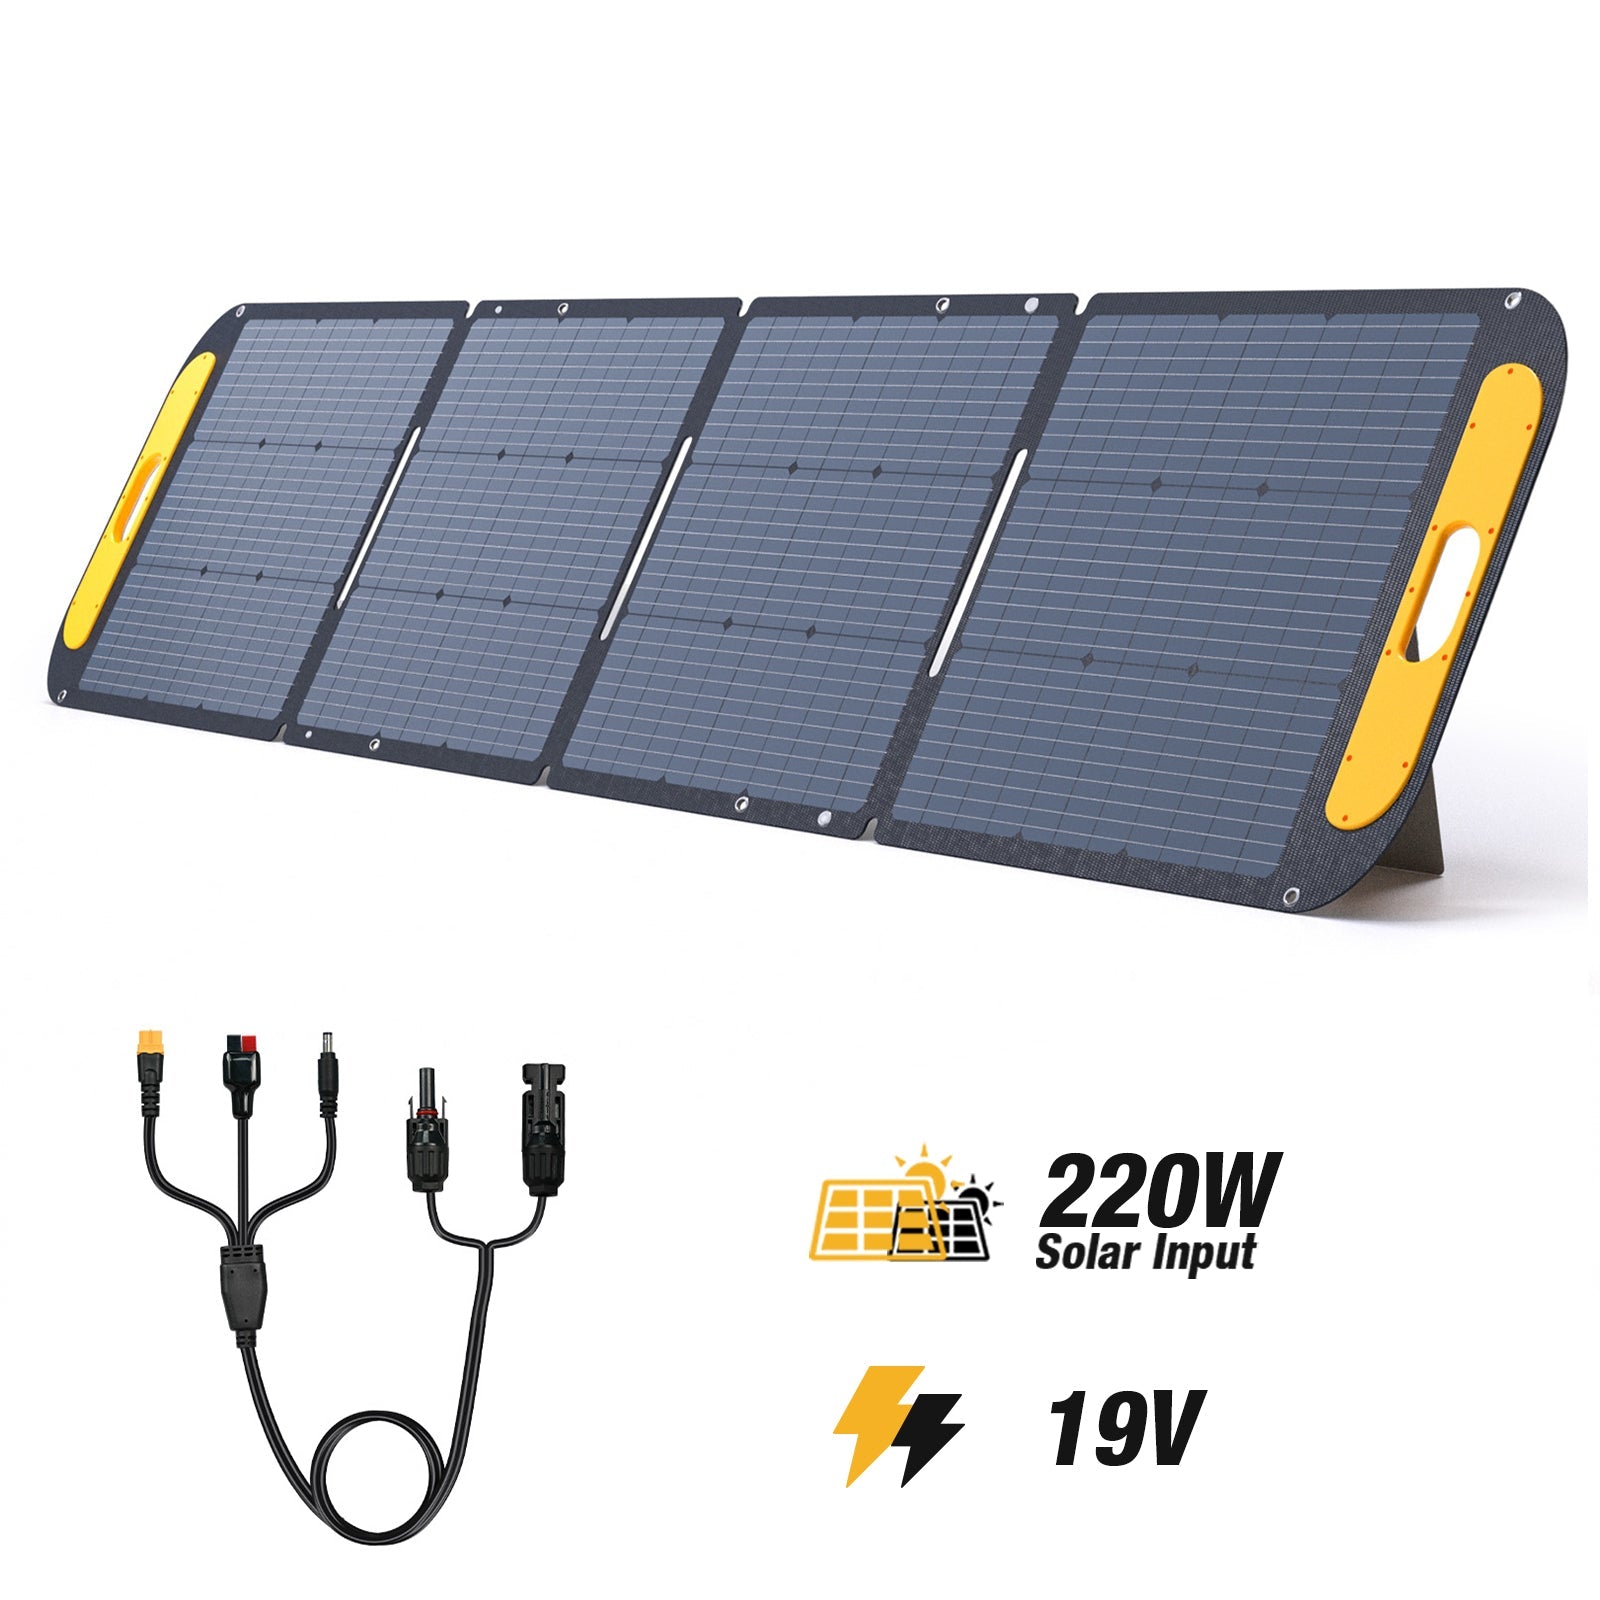 Jump 1500W/4752Wh 220W Solar Generator